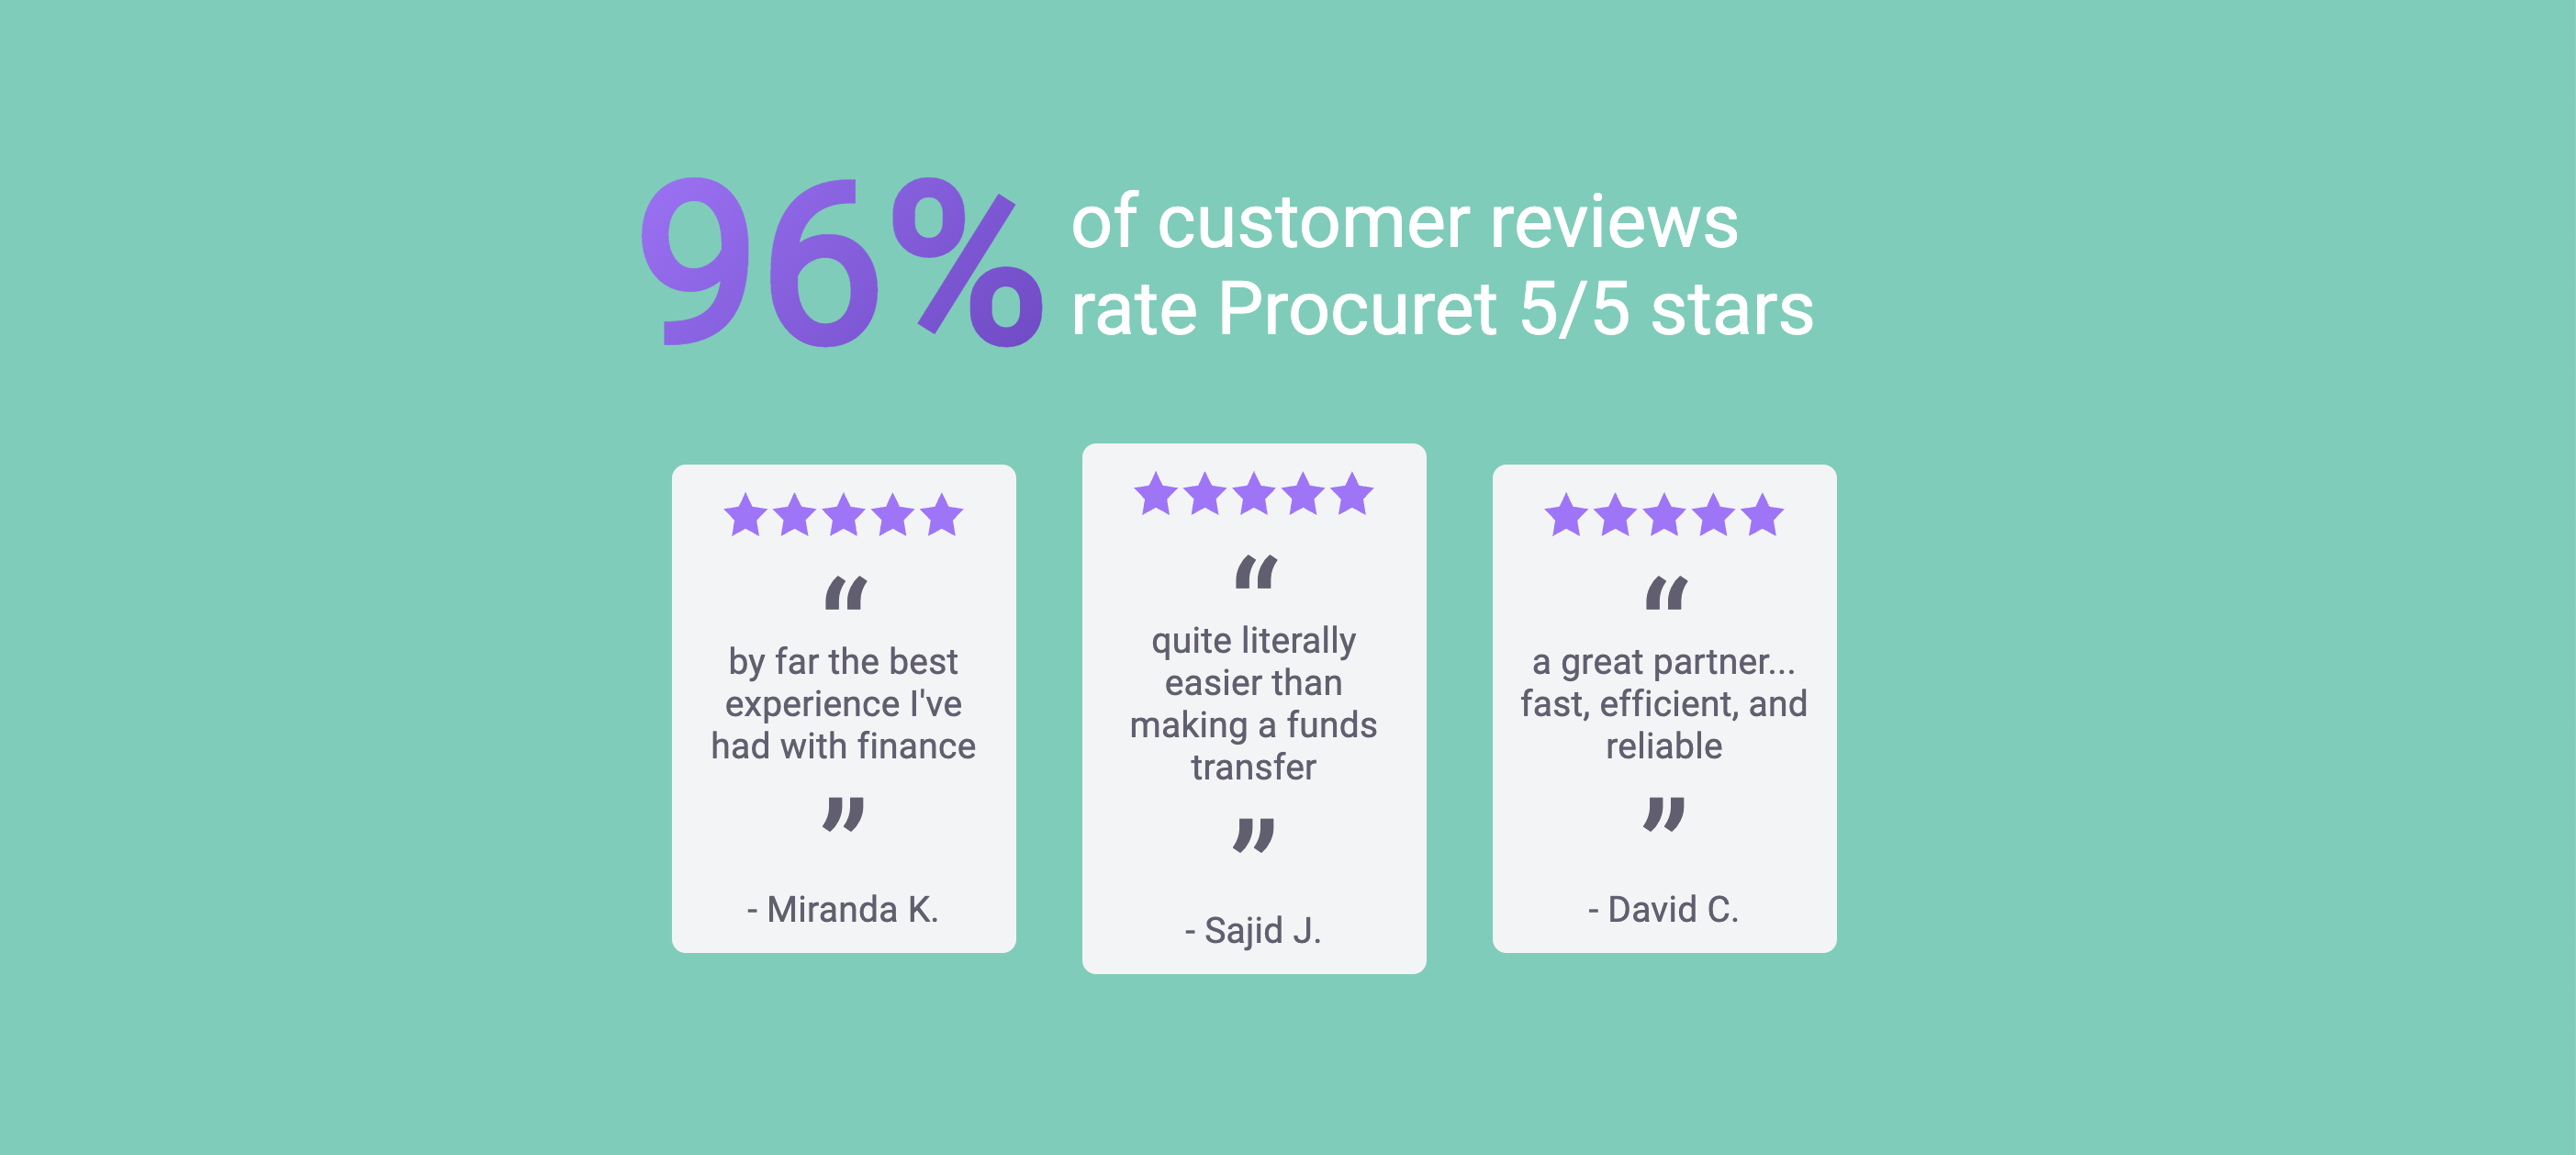 96% of customer reviews rate Procuret 5/5 stars